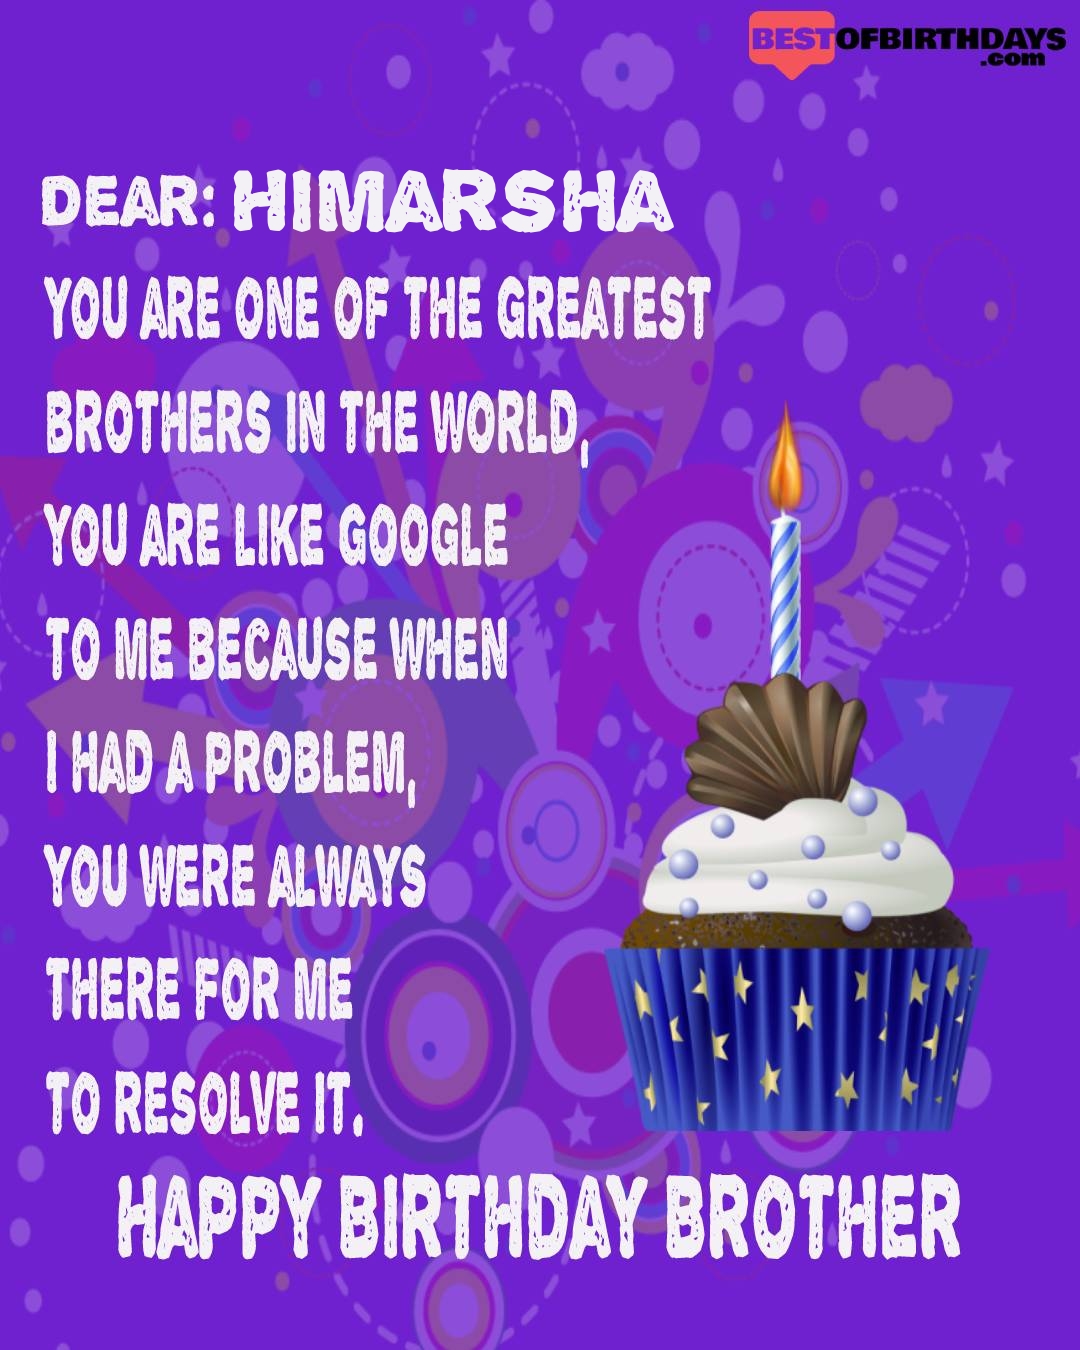 Happy birthday himarsha bhai brother bro